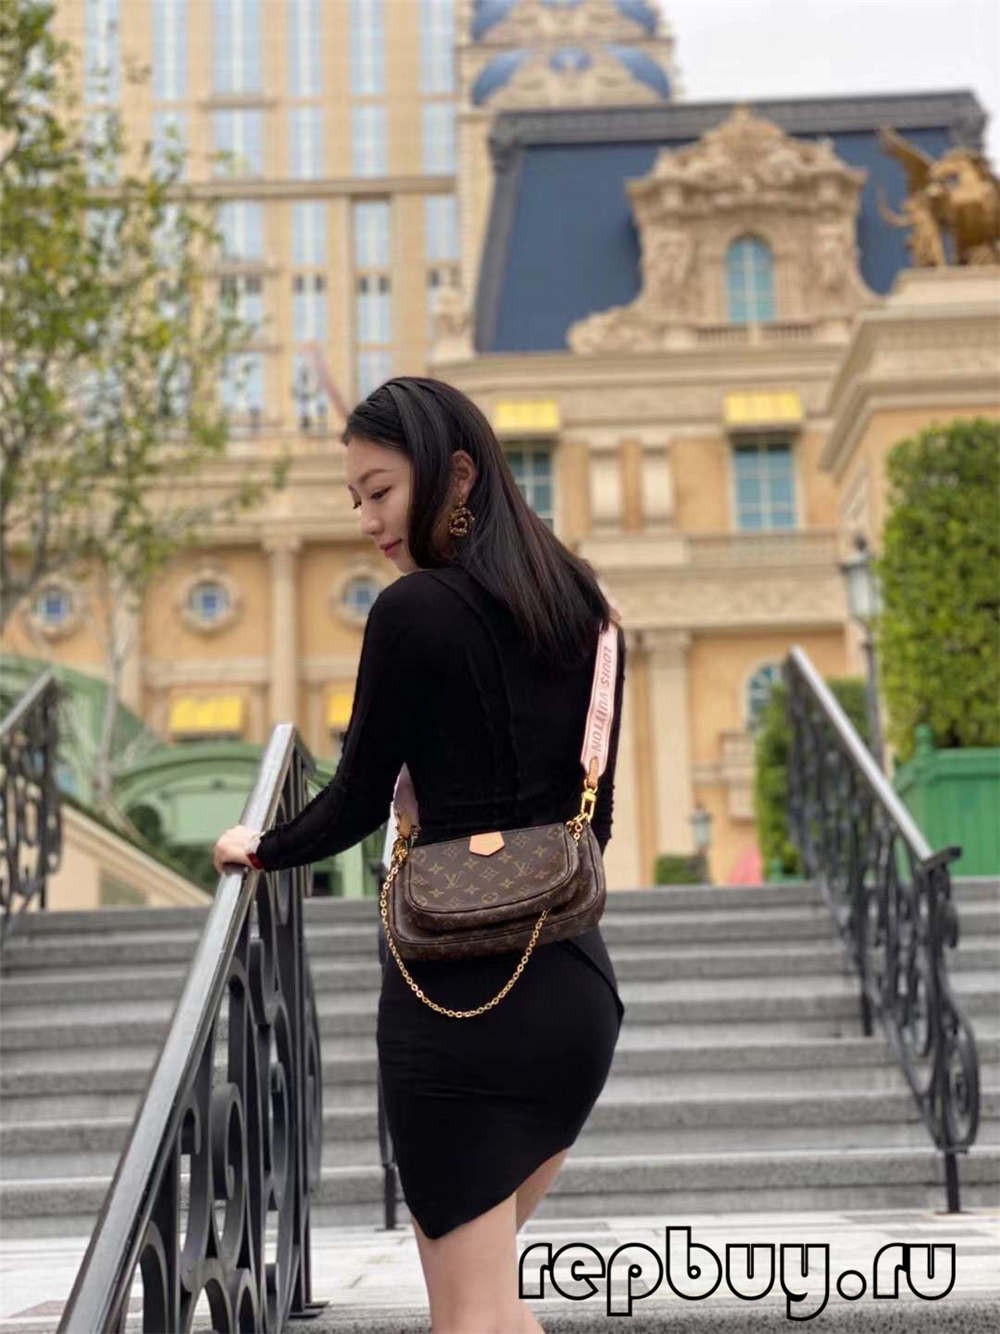 Louis Vuitton M44840 Multi Pochette 24cm Top Replica Bags Daily use effect (2022 Latest)-Best Quality Fake Louis Vuitton Bag Online Store, Replica designer bag ru